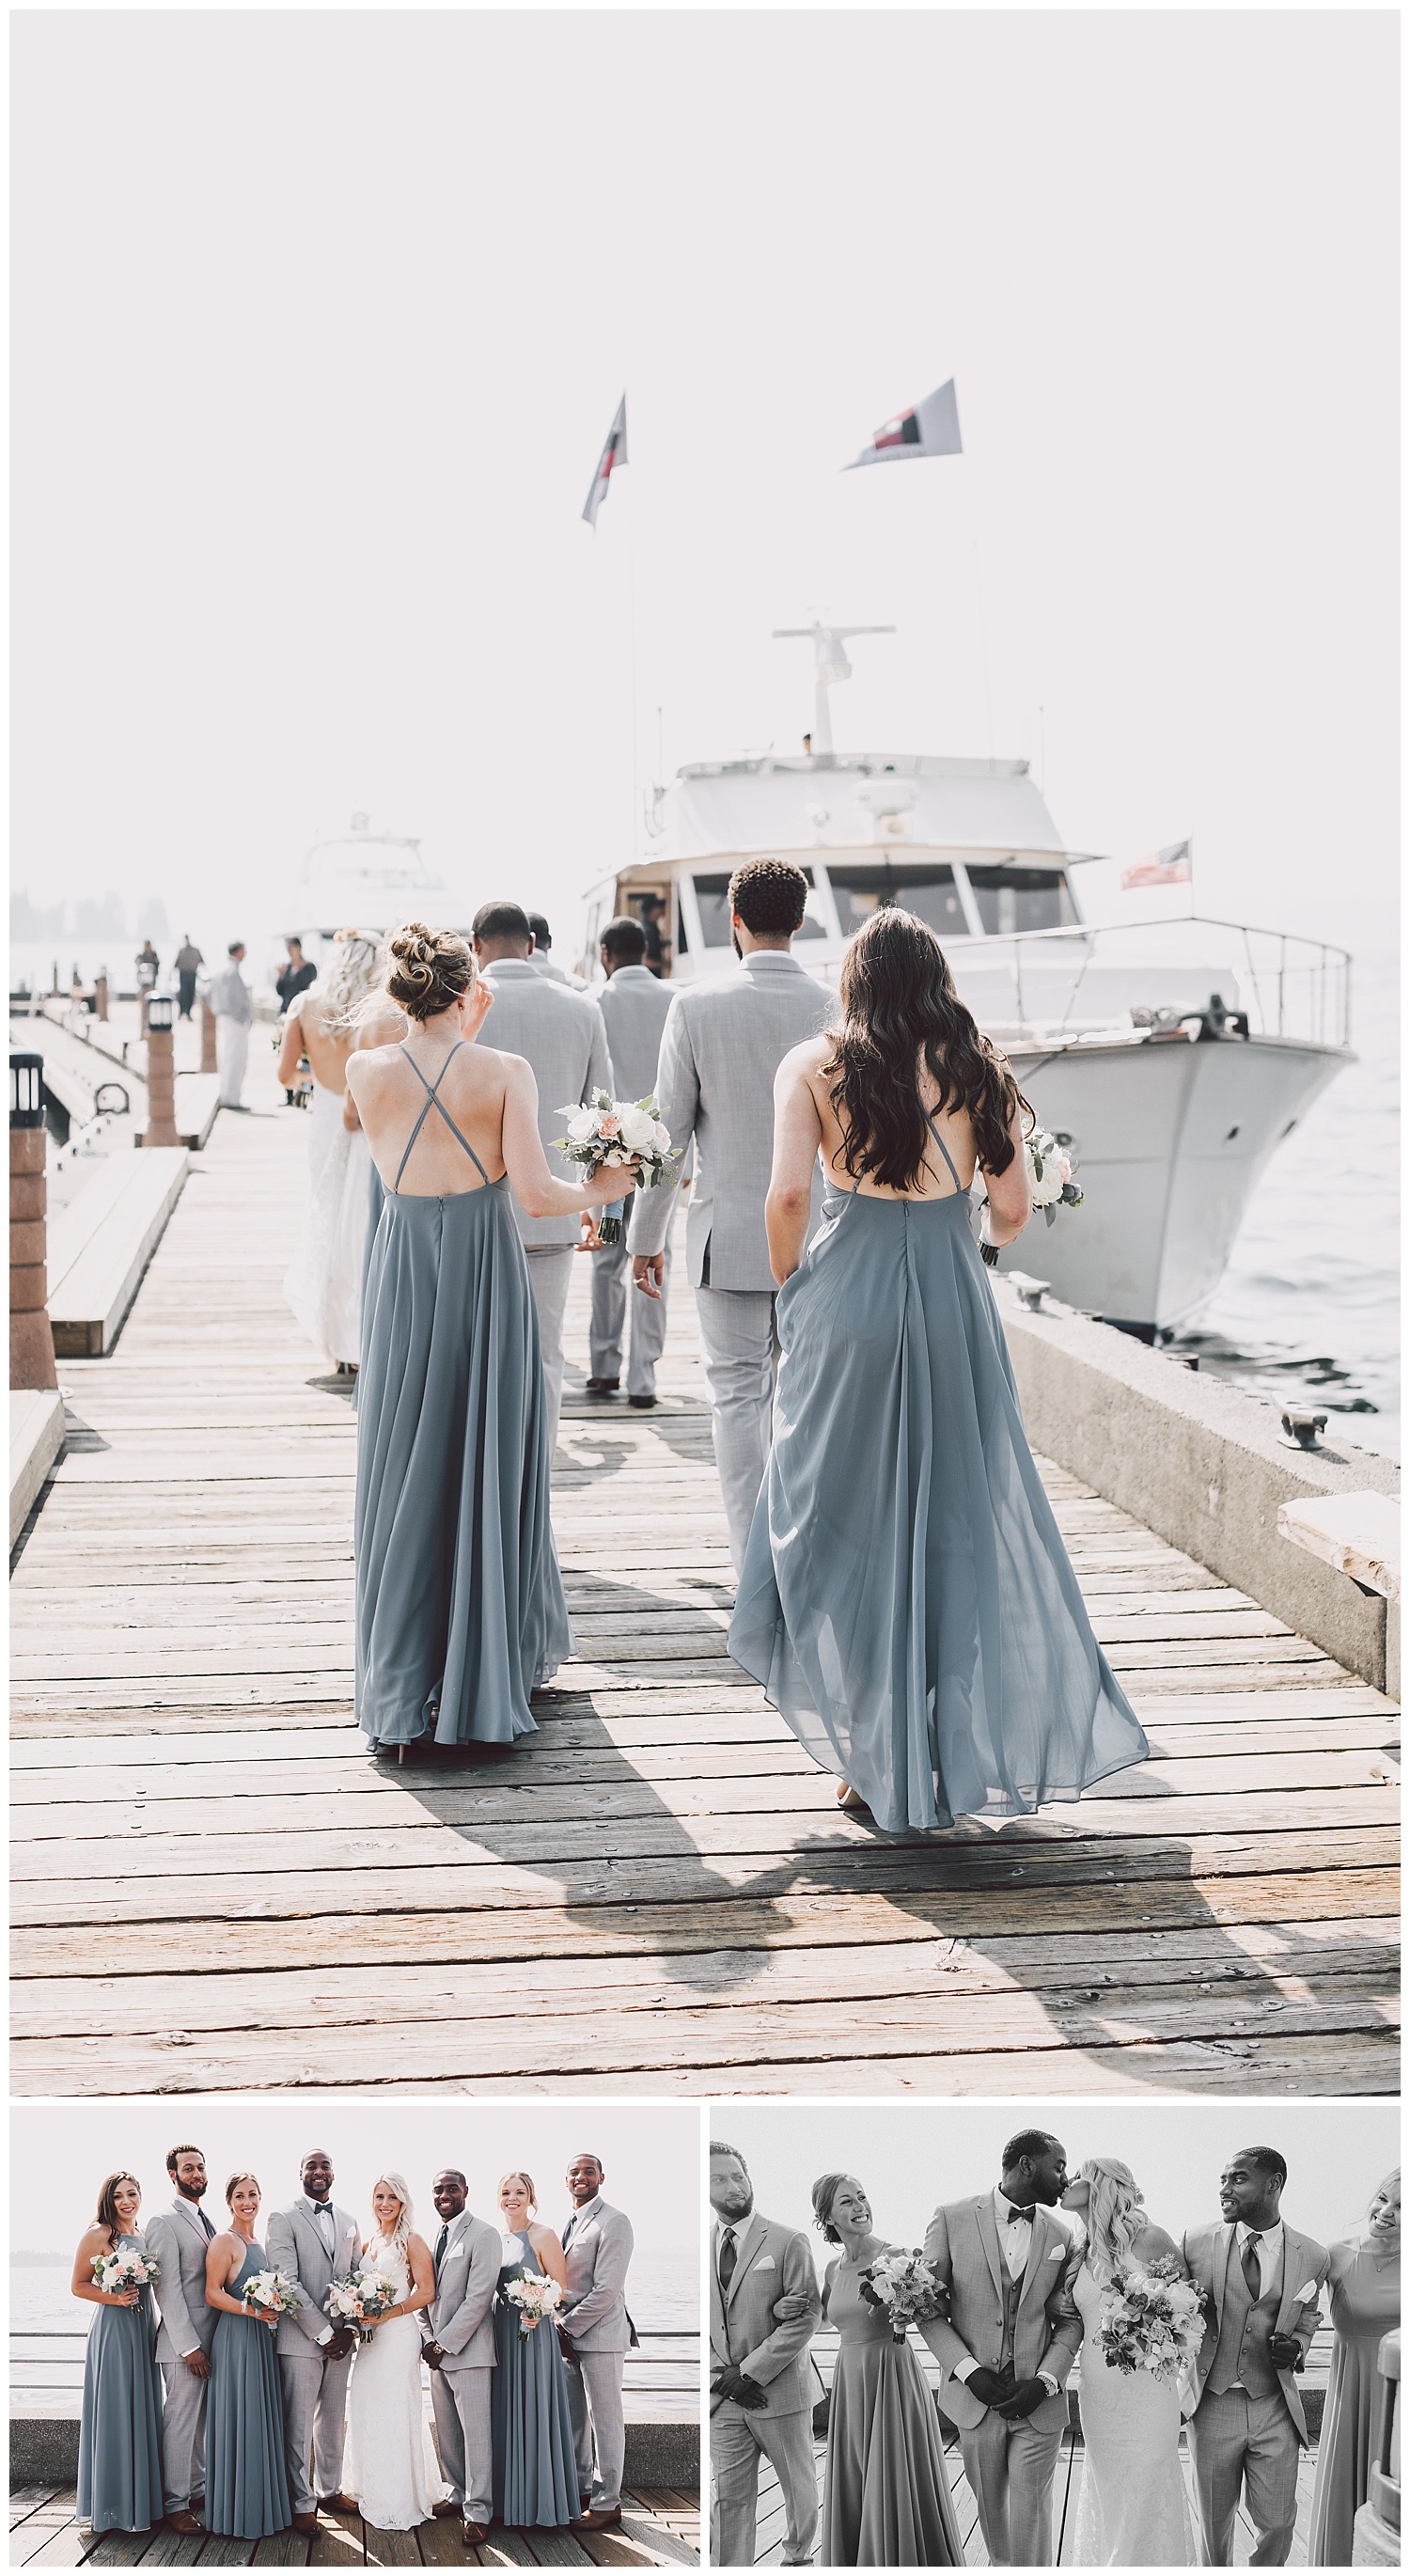 Dock photos for their Woodmark Hotel wedding